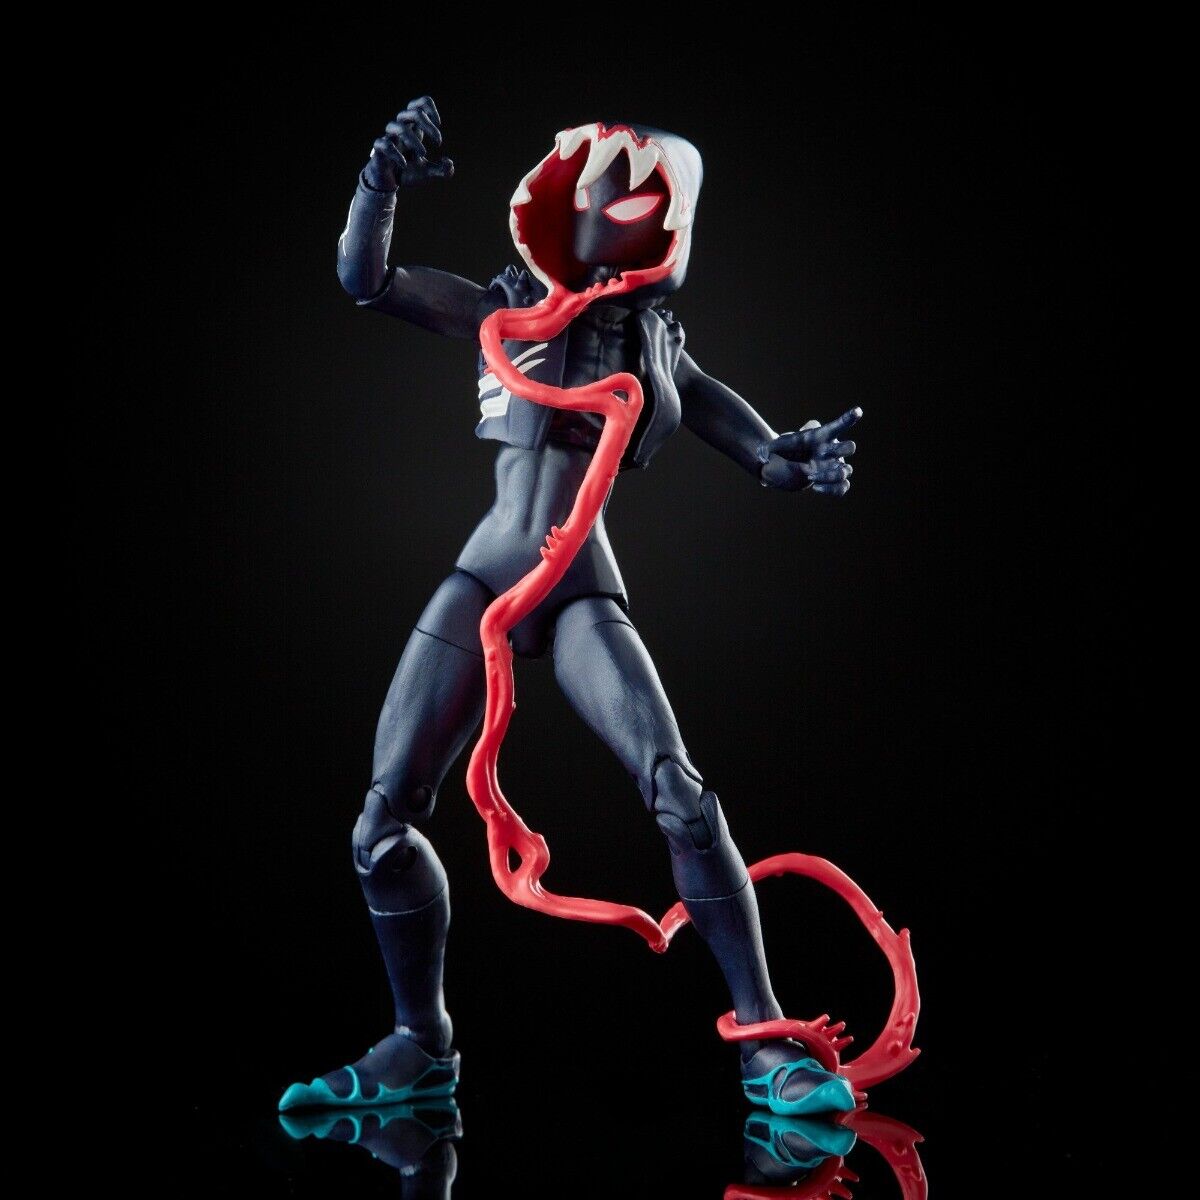 Spider-Man: Maximum Venom - Ghost-Spider Marvel Legends 6” Action Figure